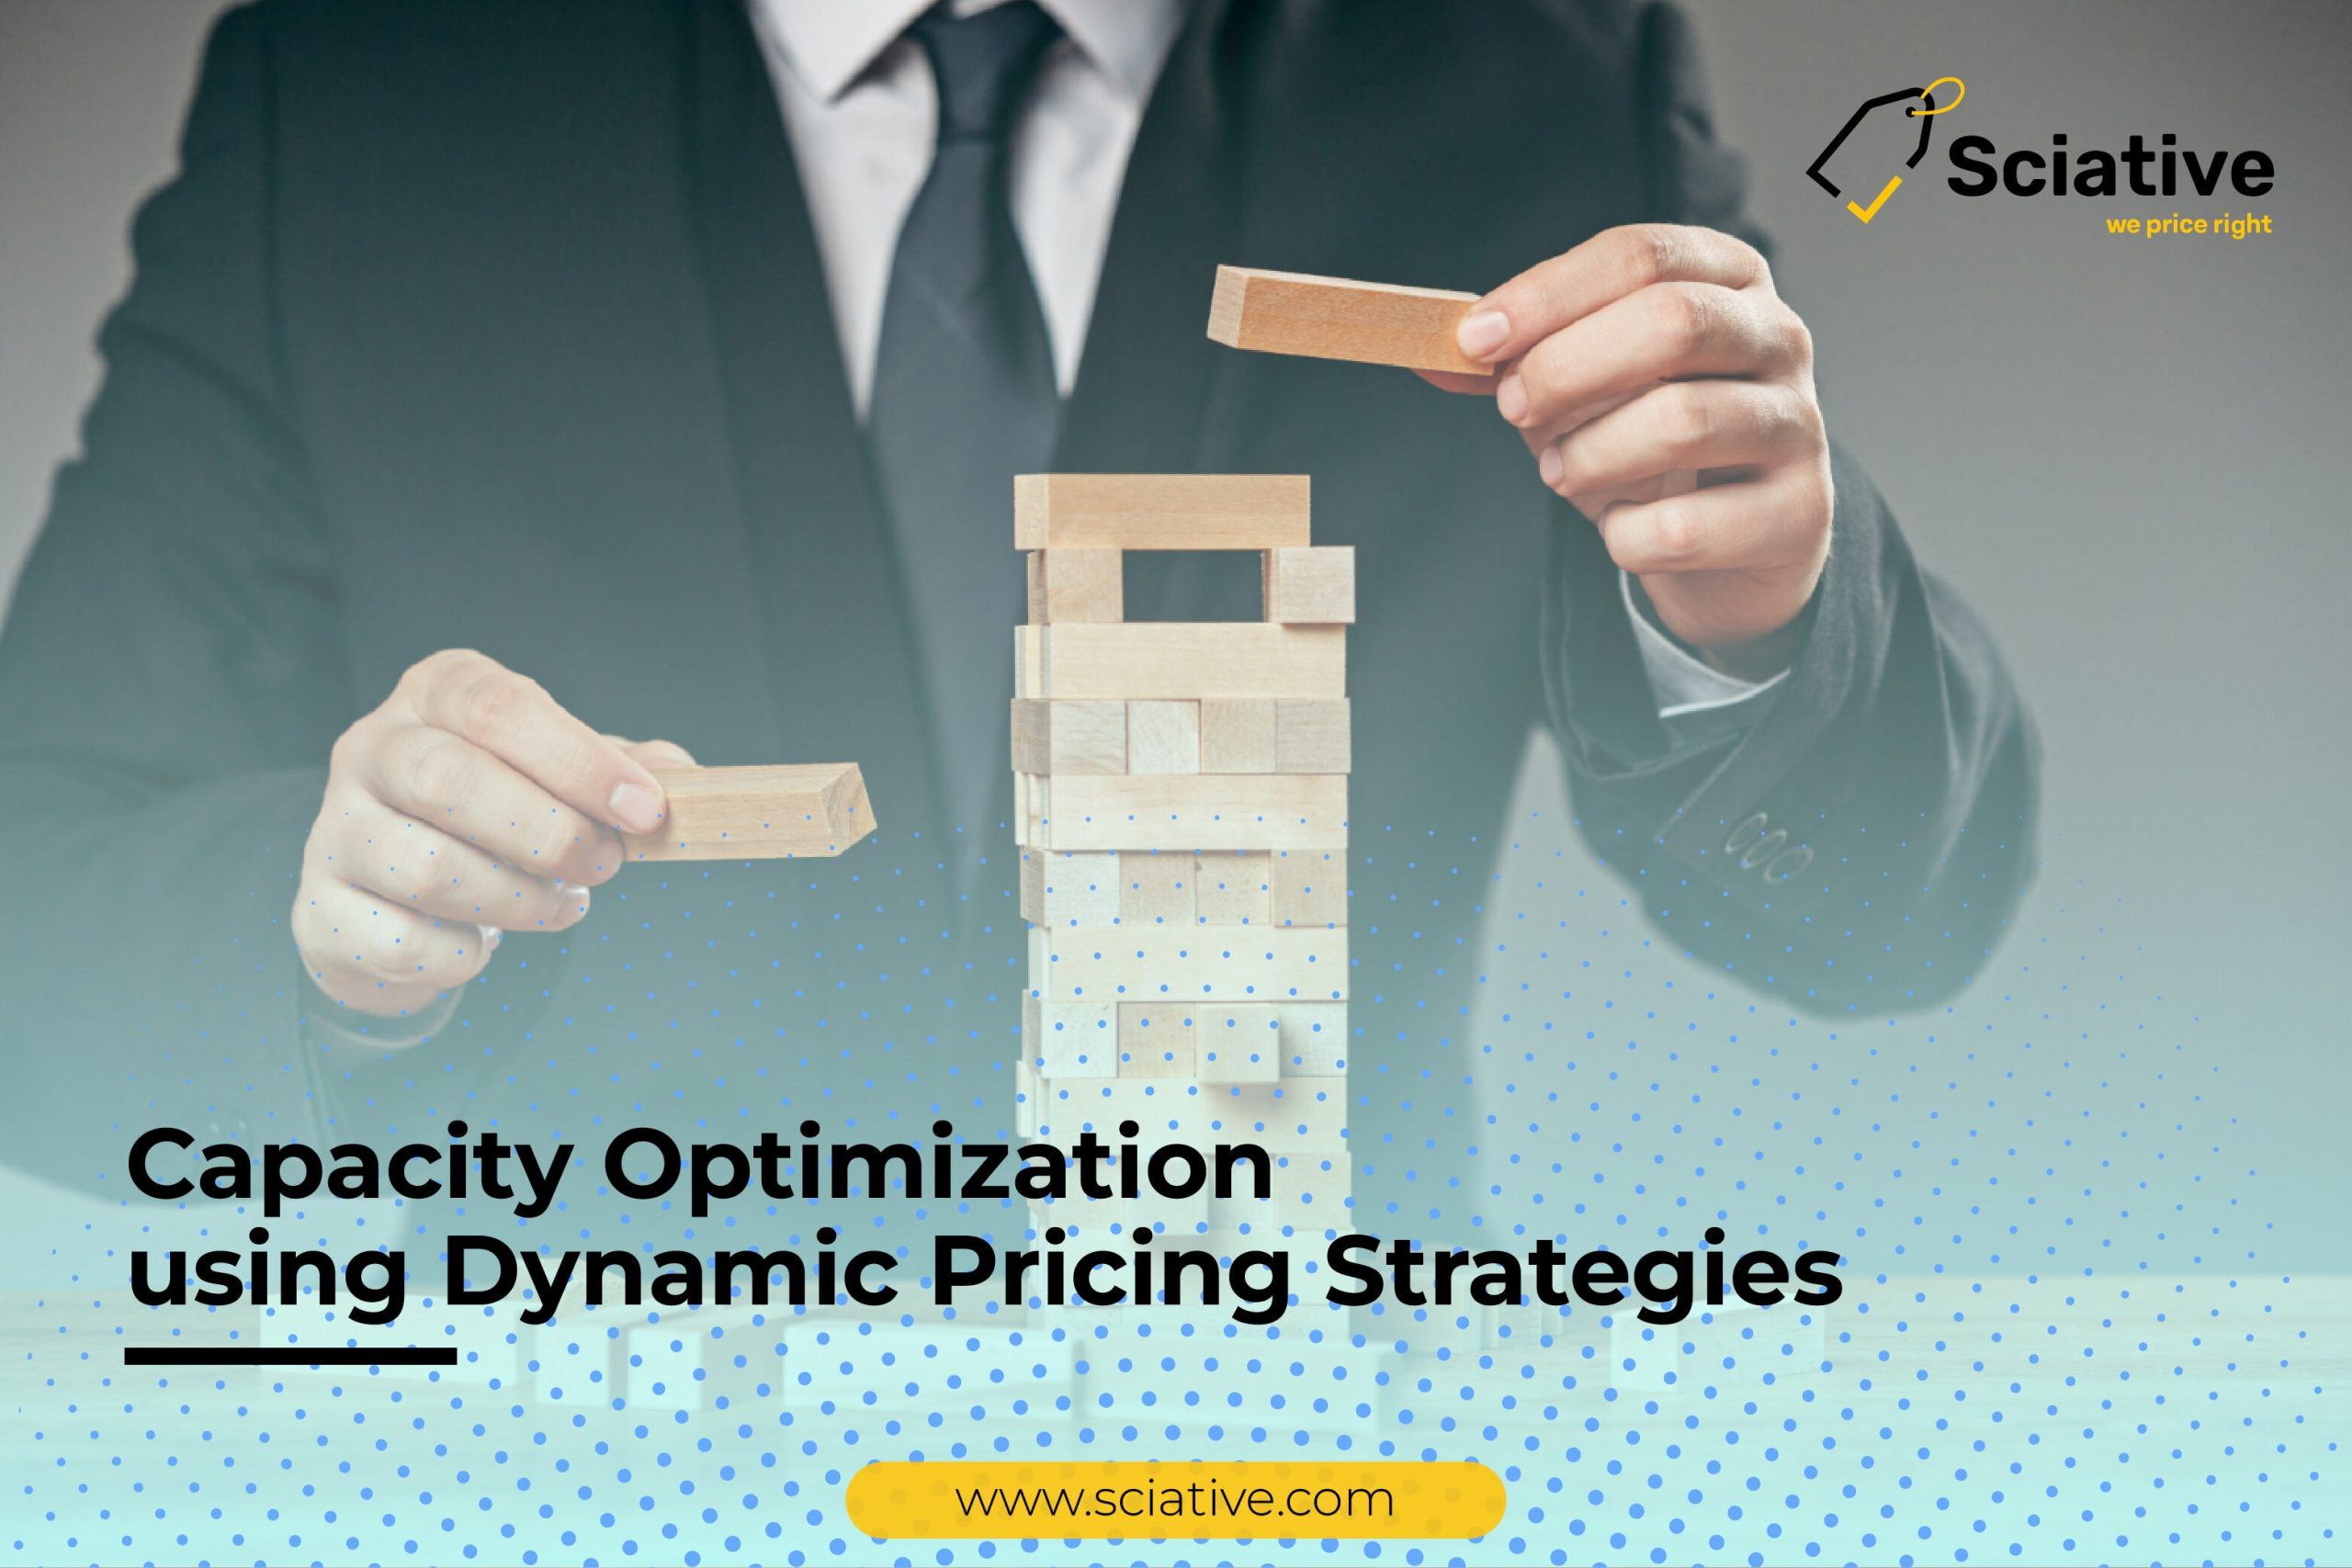 Capacity optimization using Dynamic Pricing Strategies